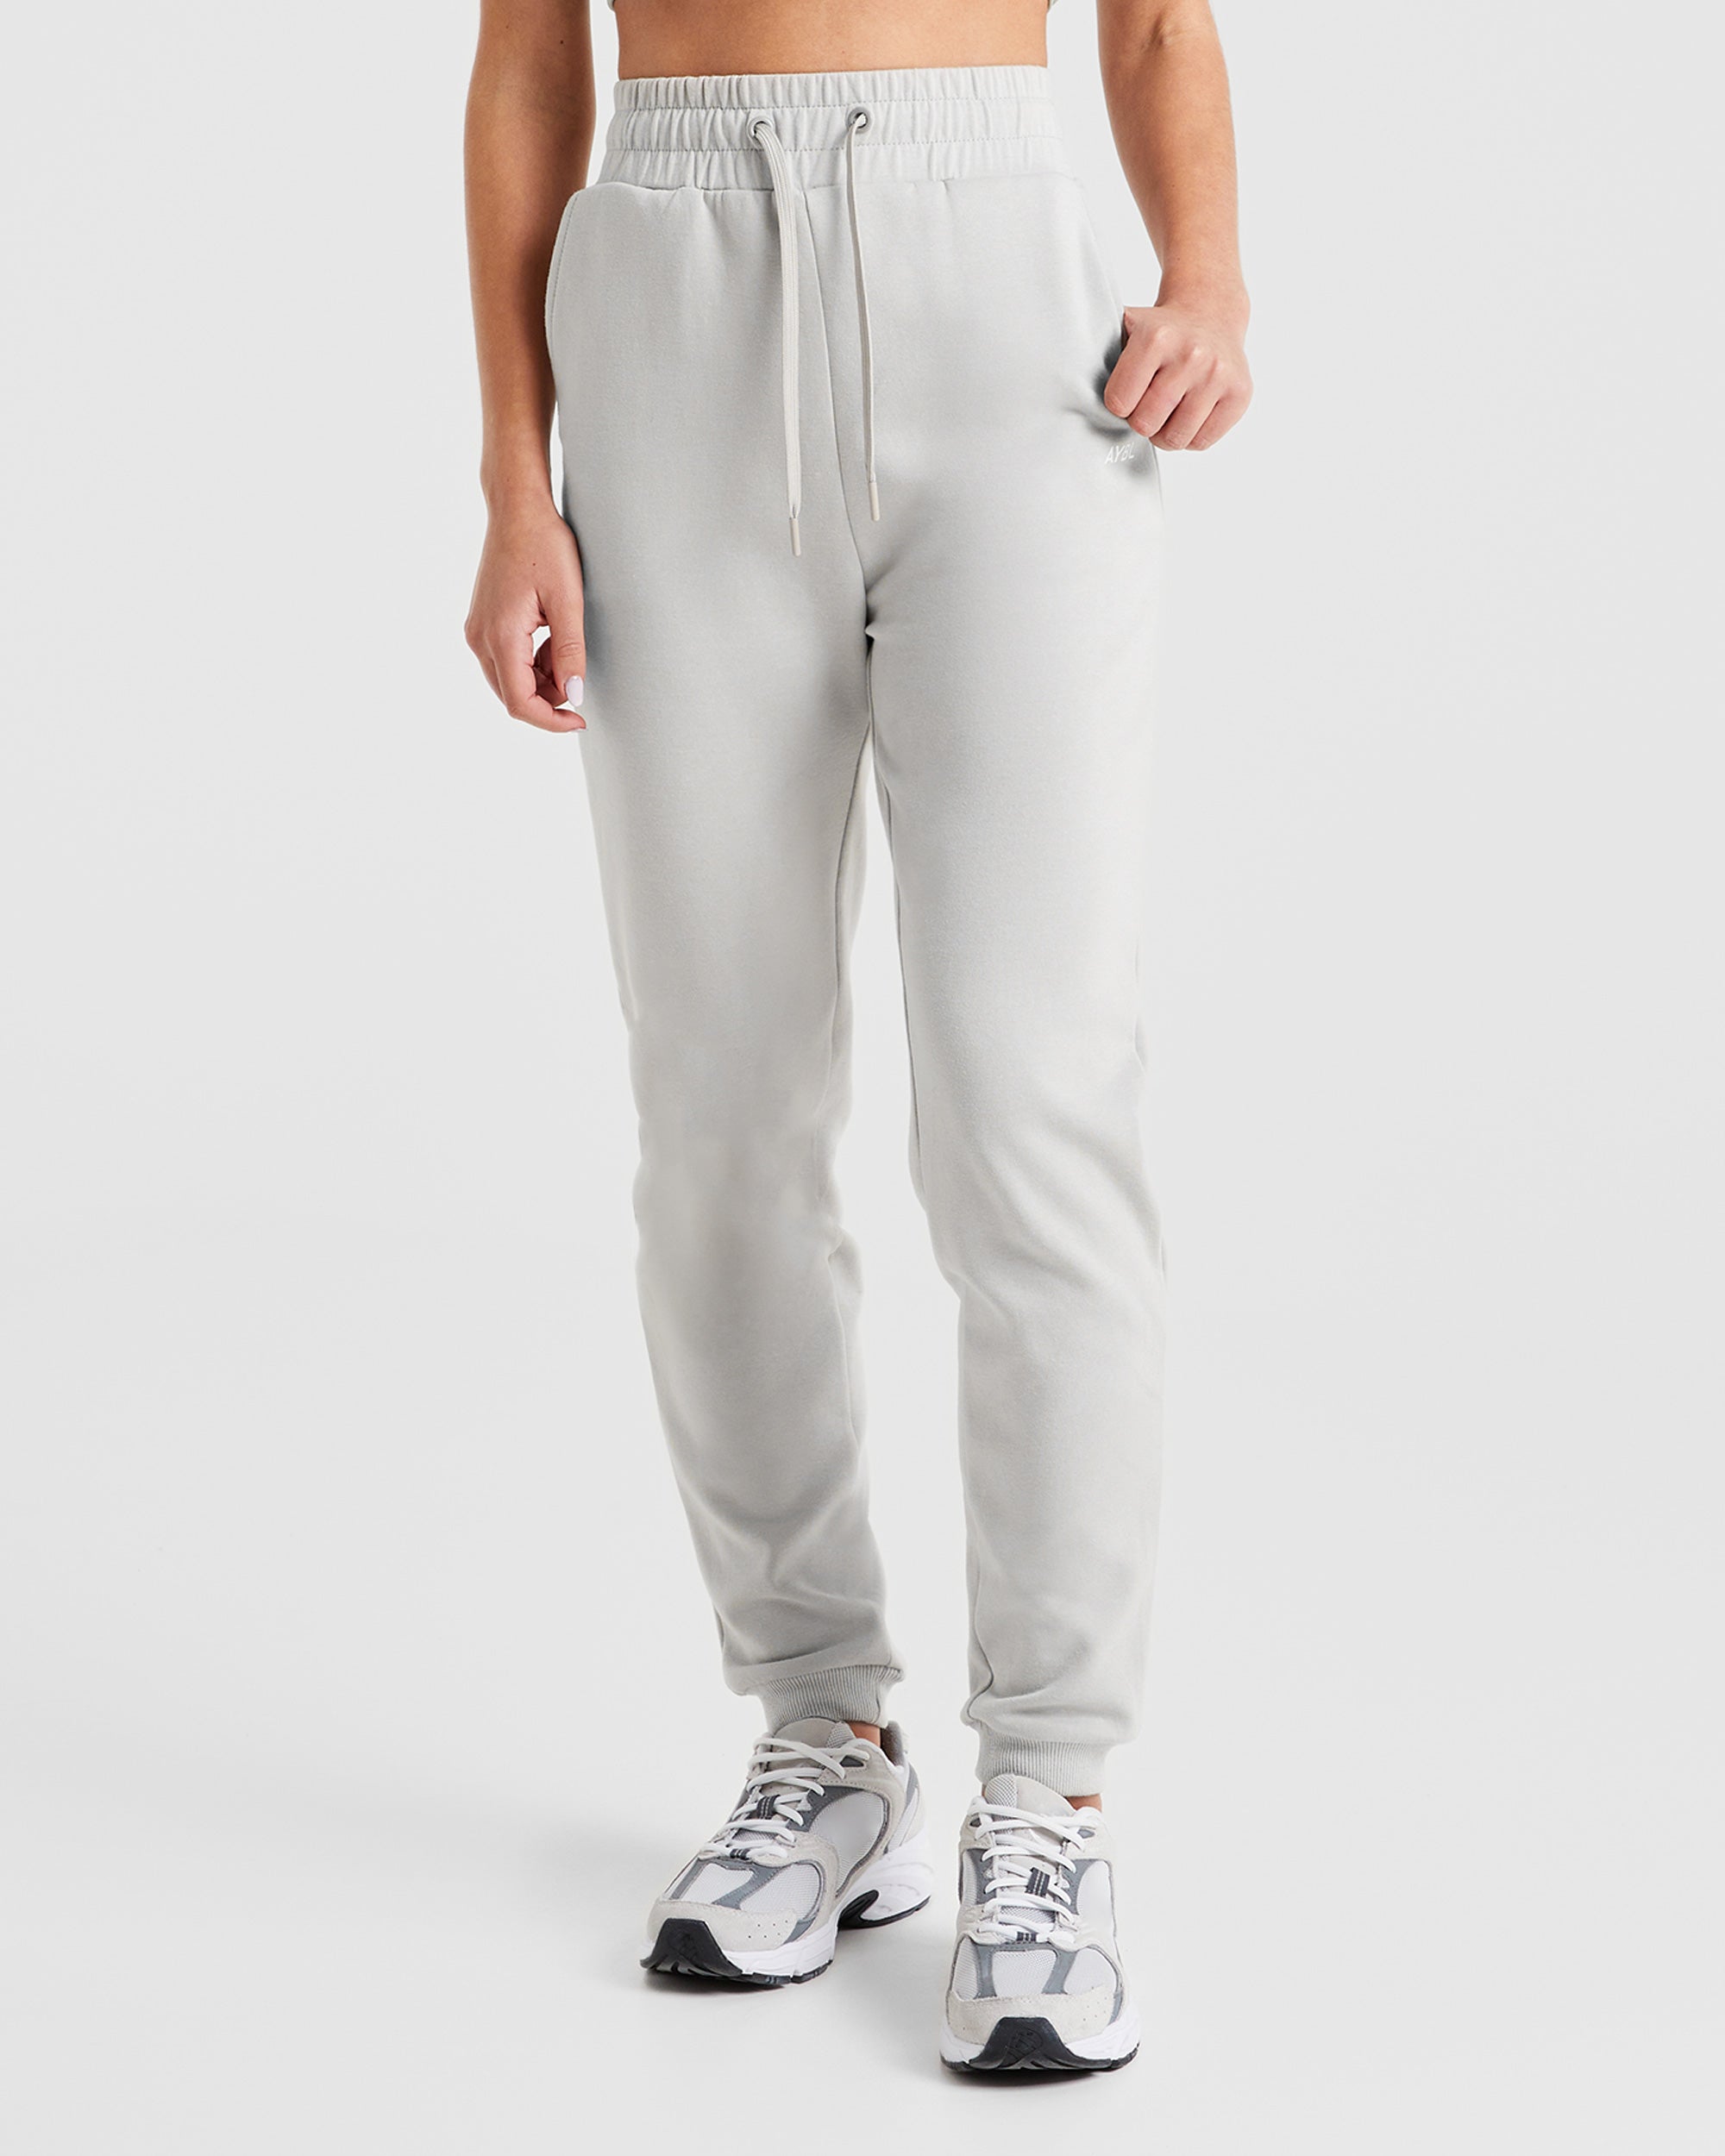 AYBL core leggings - ‘asphalt grey’ size XS , hate to